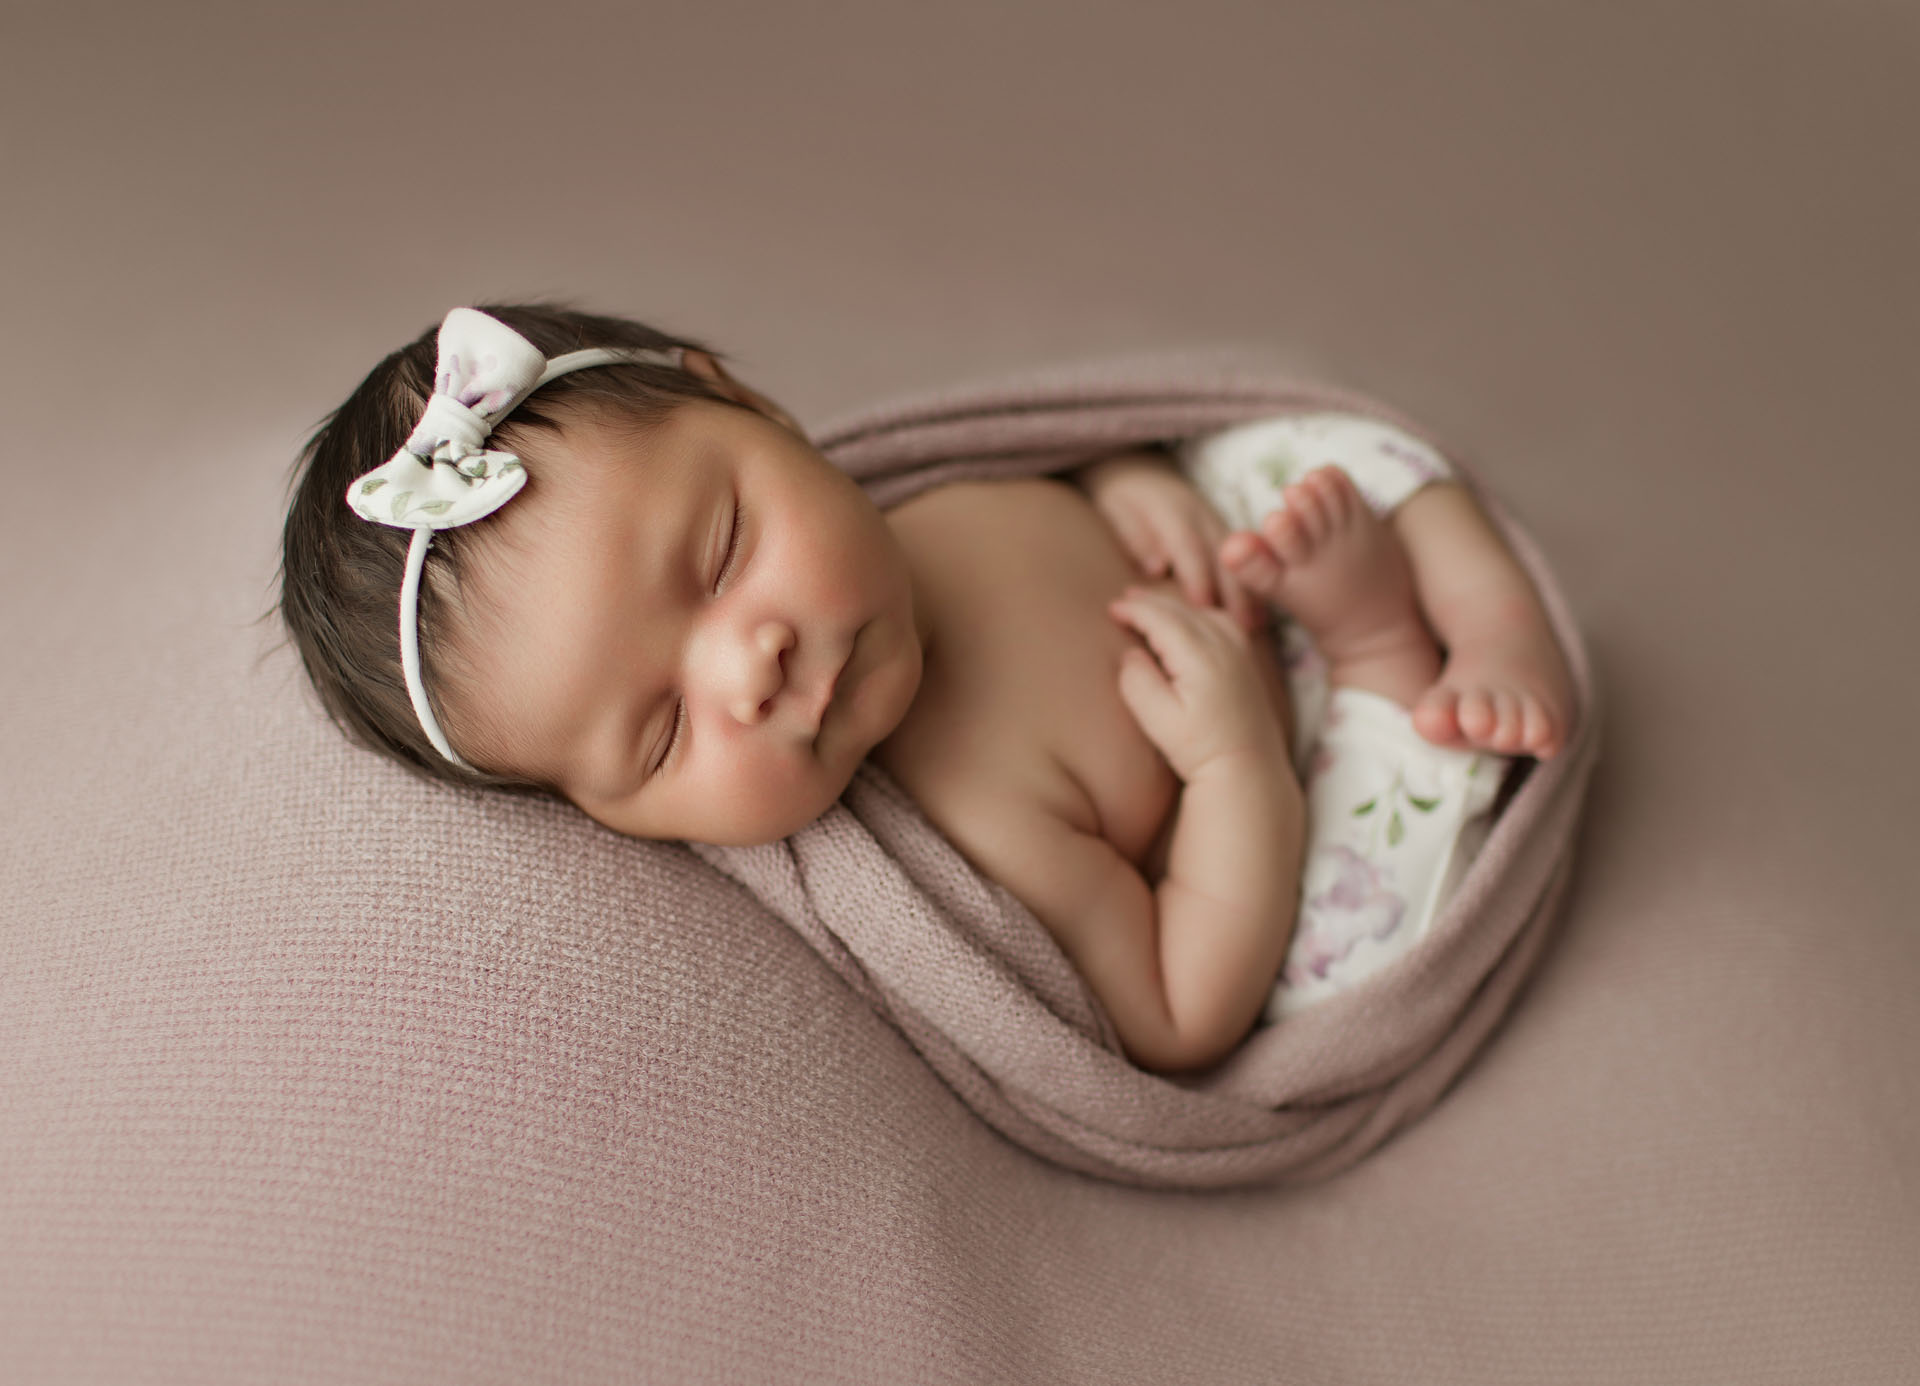 Newborn baby girl portrait on lavender